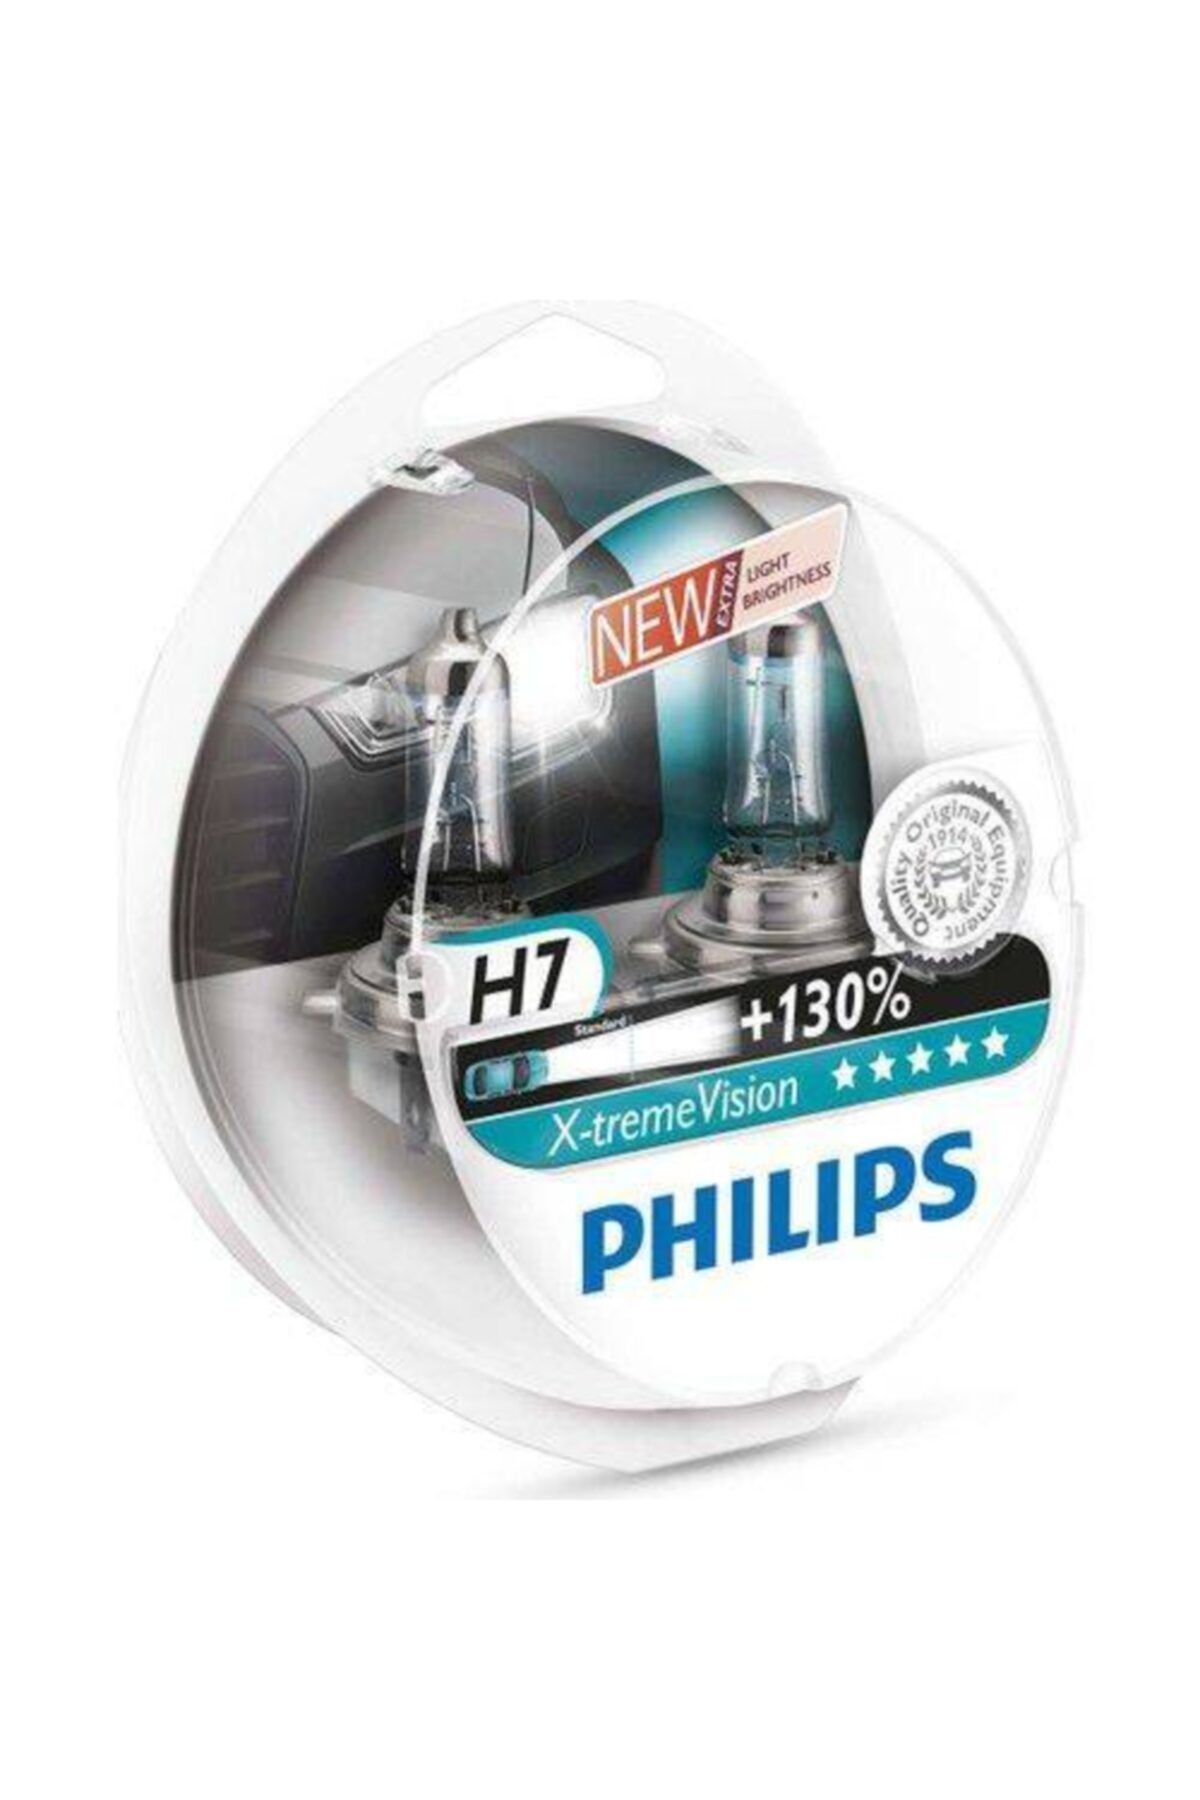 Philips H7 X Treme Vision +130 Uzun Mesafe Aydınlatma Ampul Seti